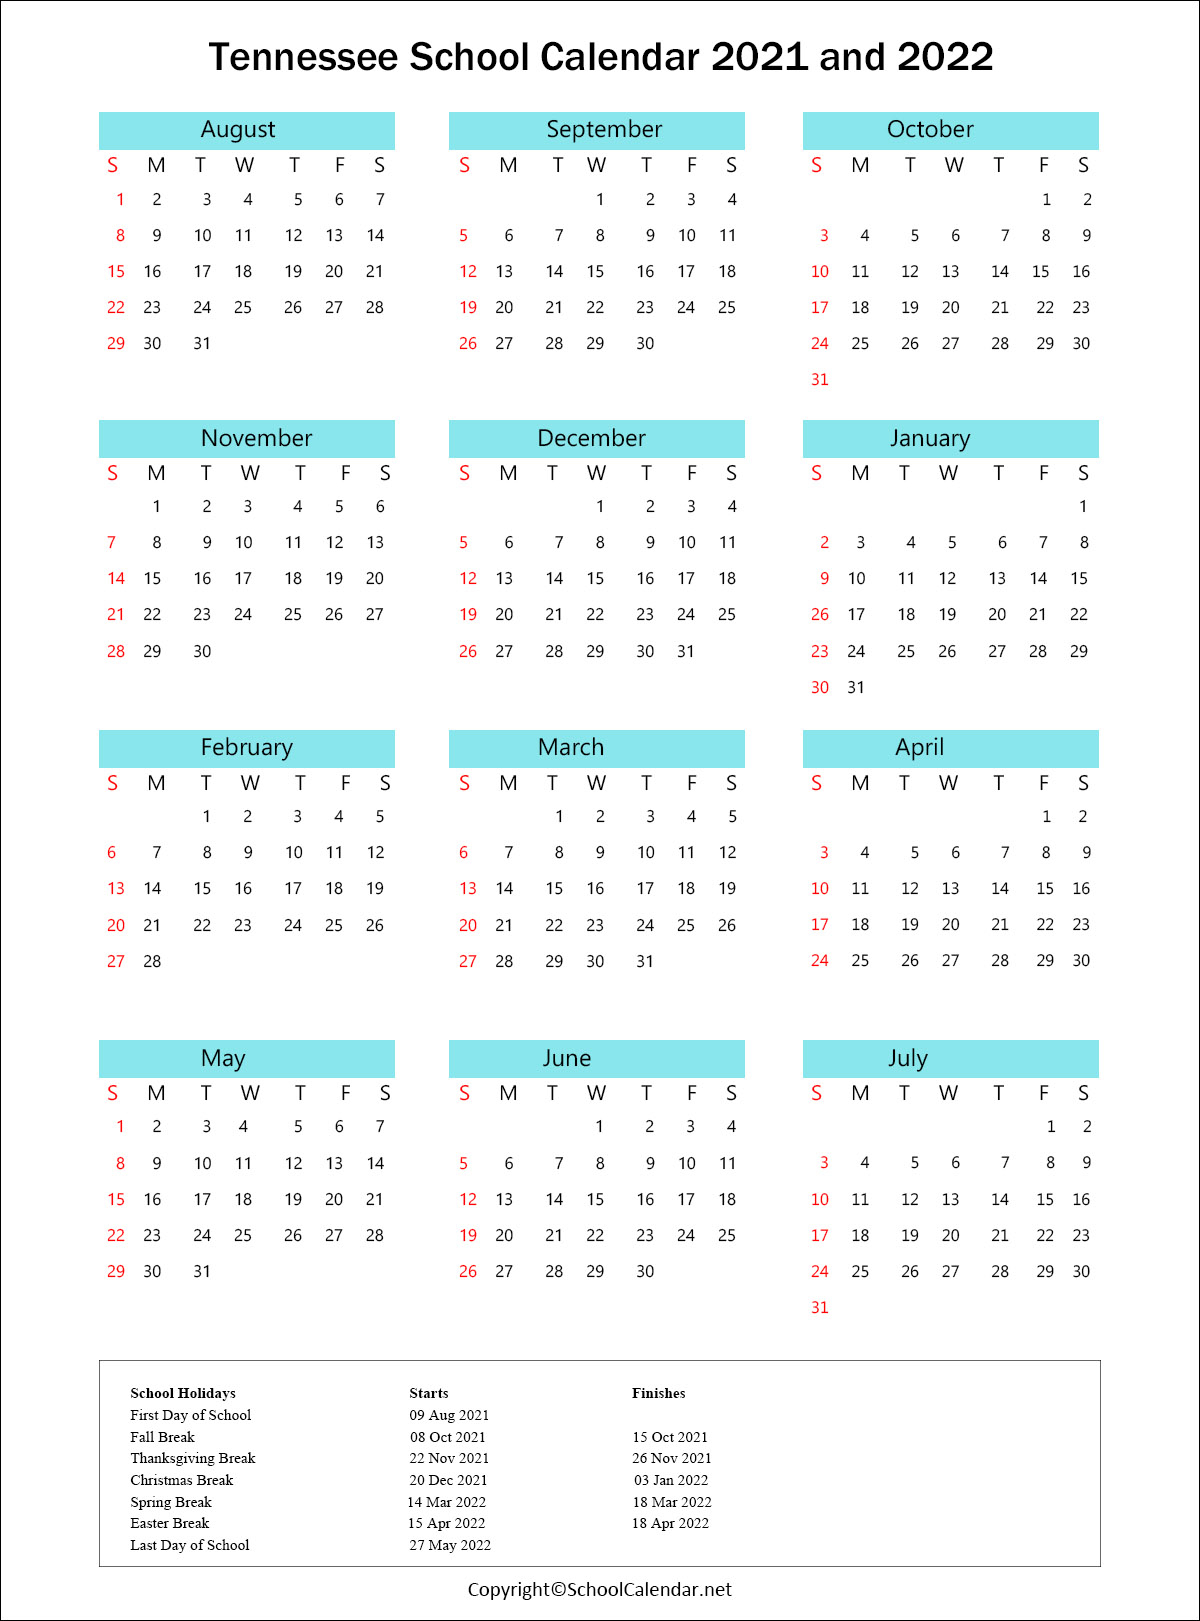 Tennessee School Calendar 2021-2022 [County School District]